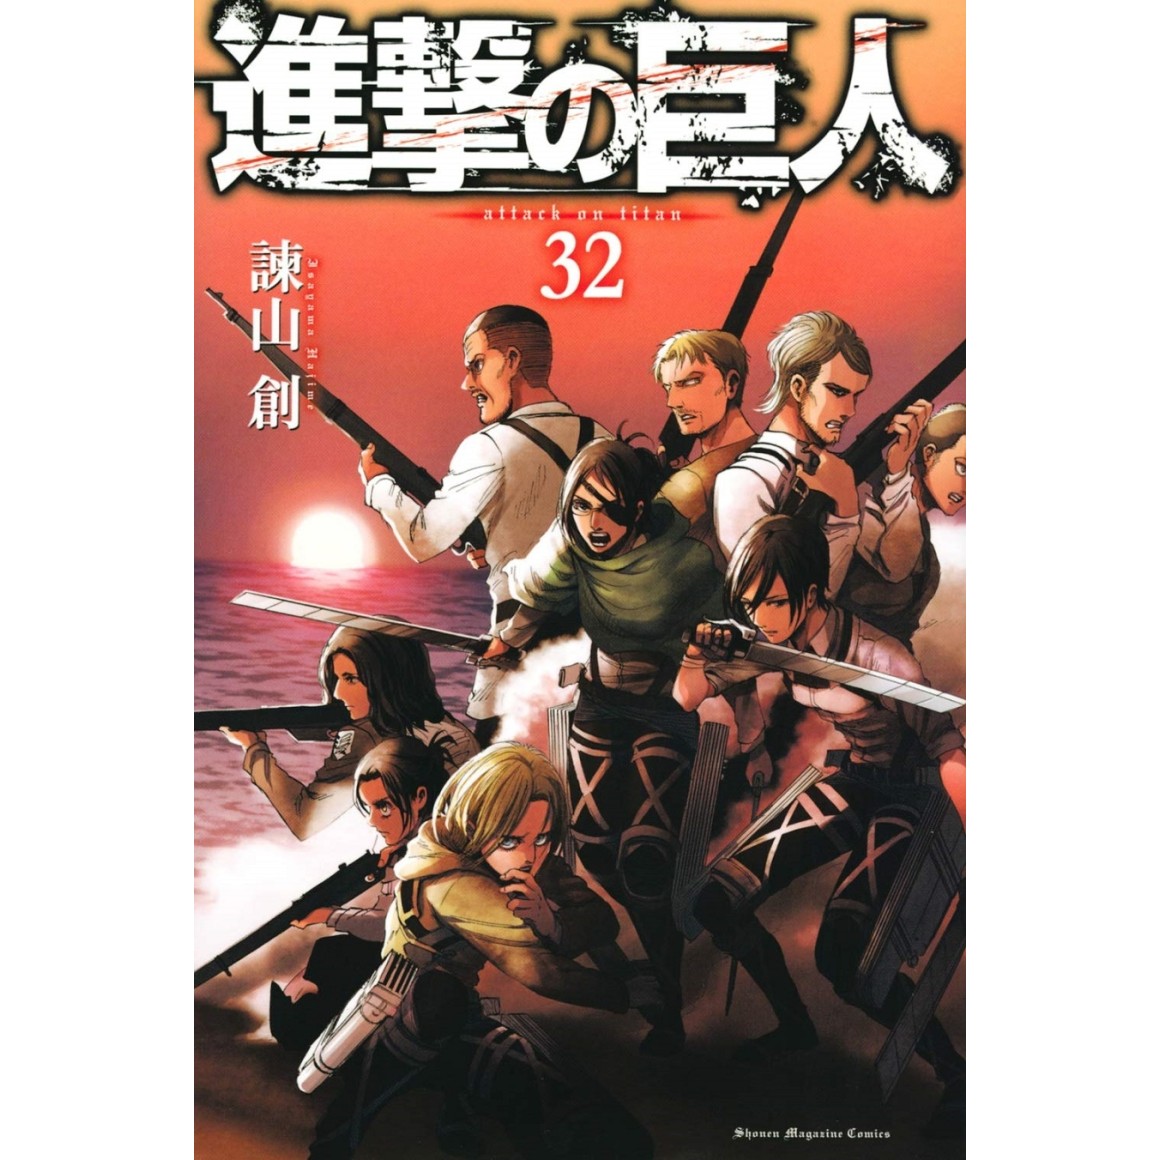 Shingeki No Kyojin (Attack on Titan) - Volume 3 Full Color Edition